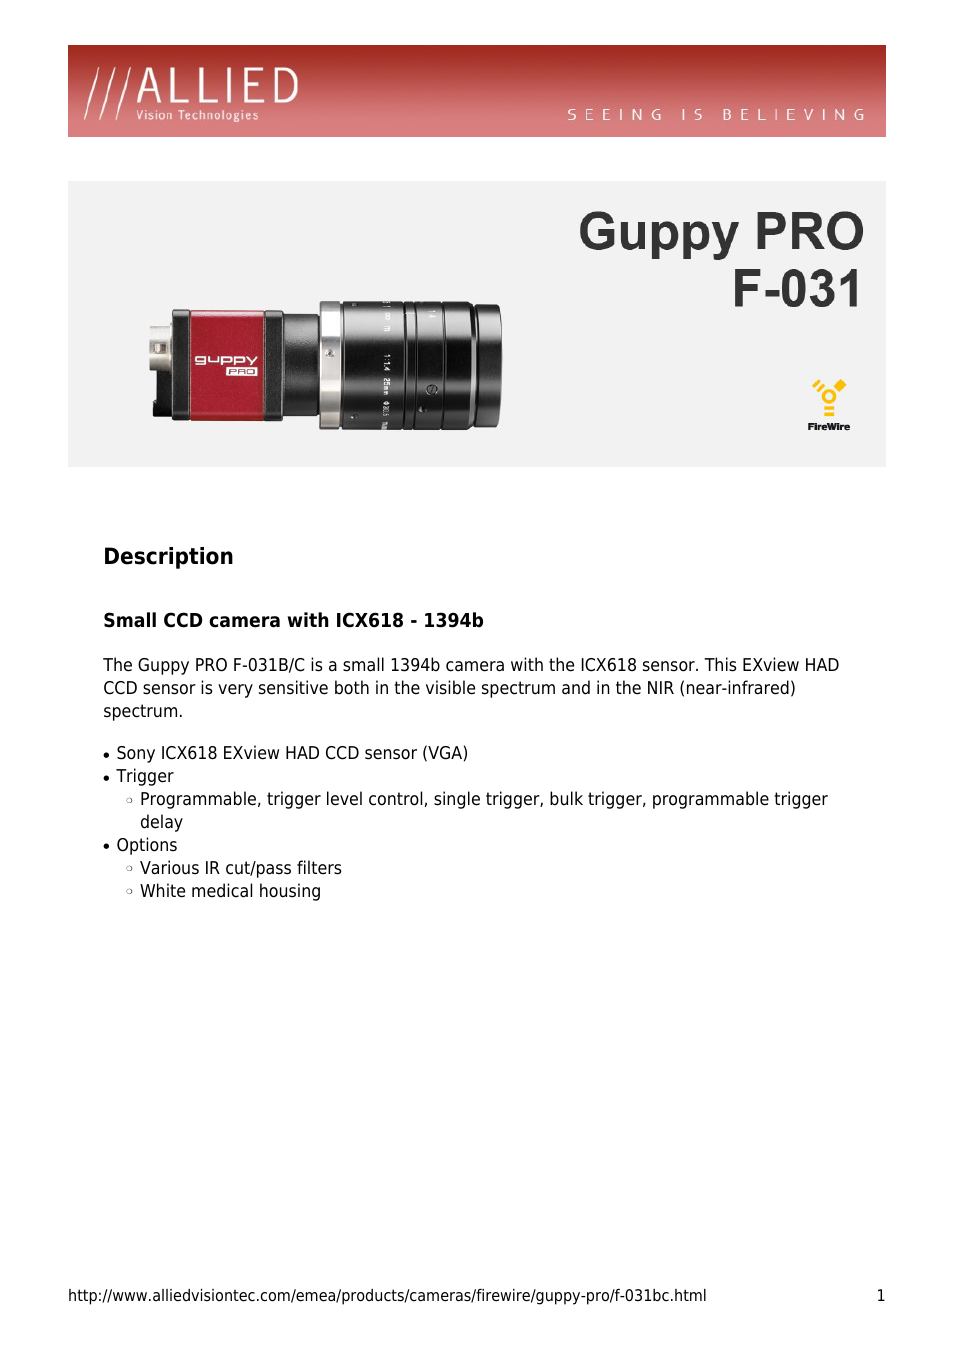 Guppy PRO F-031